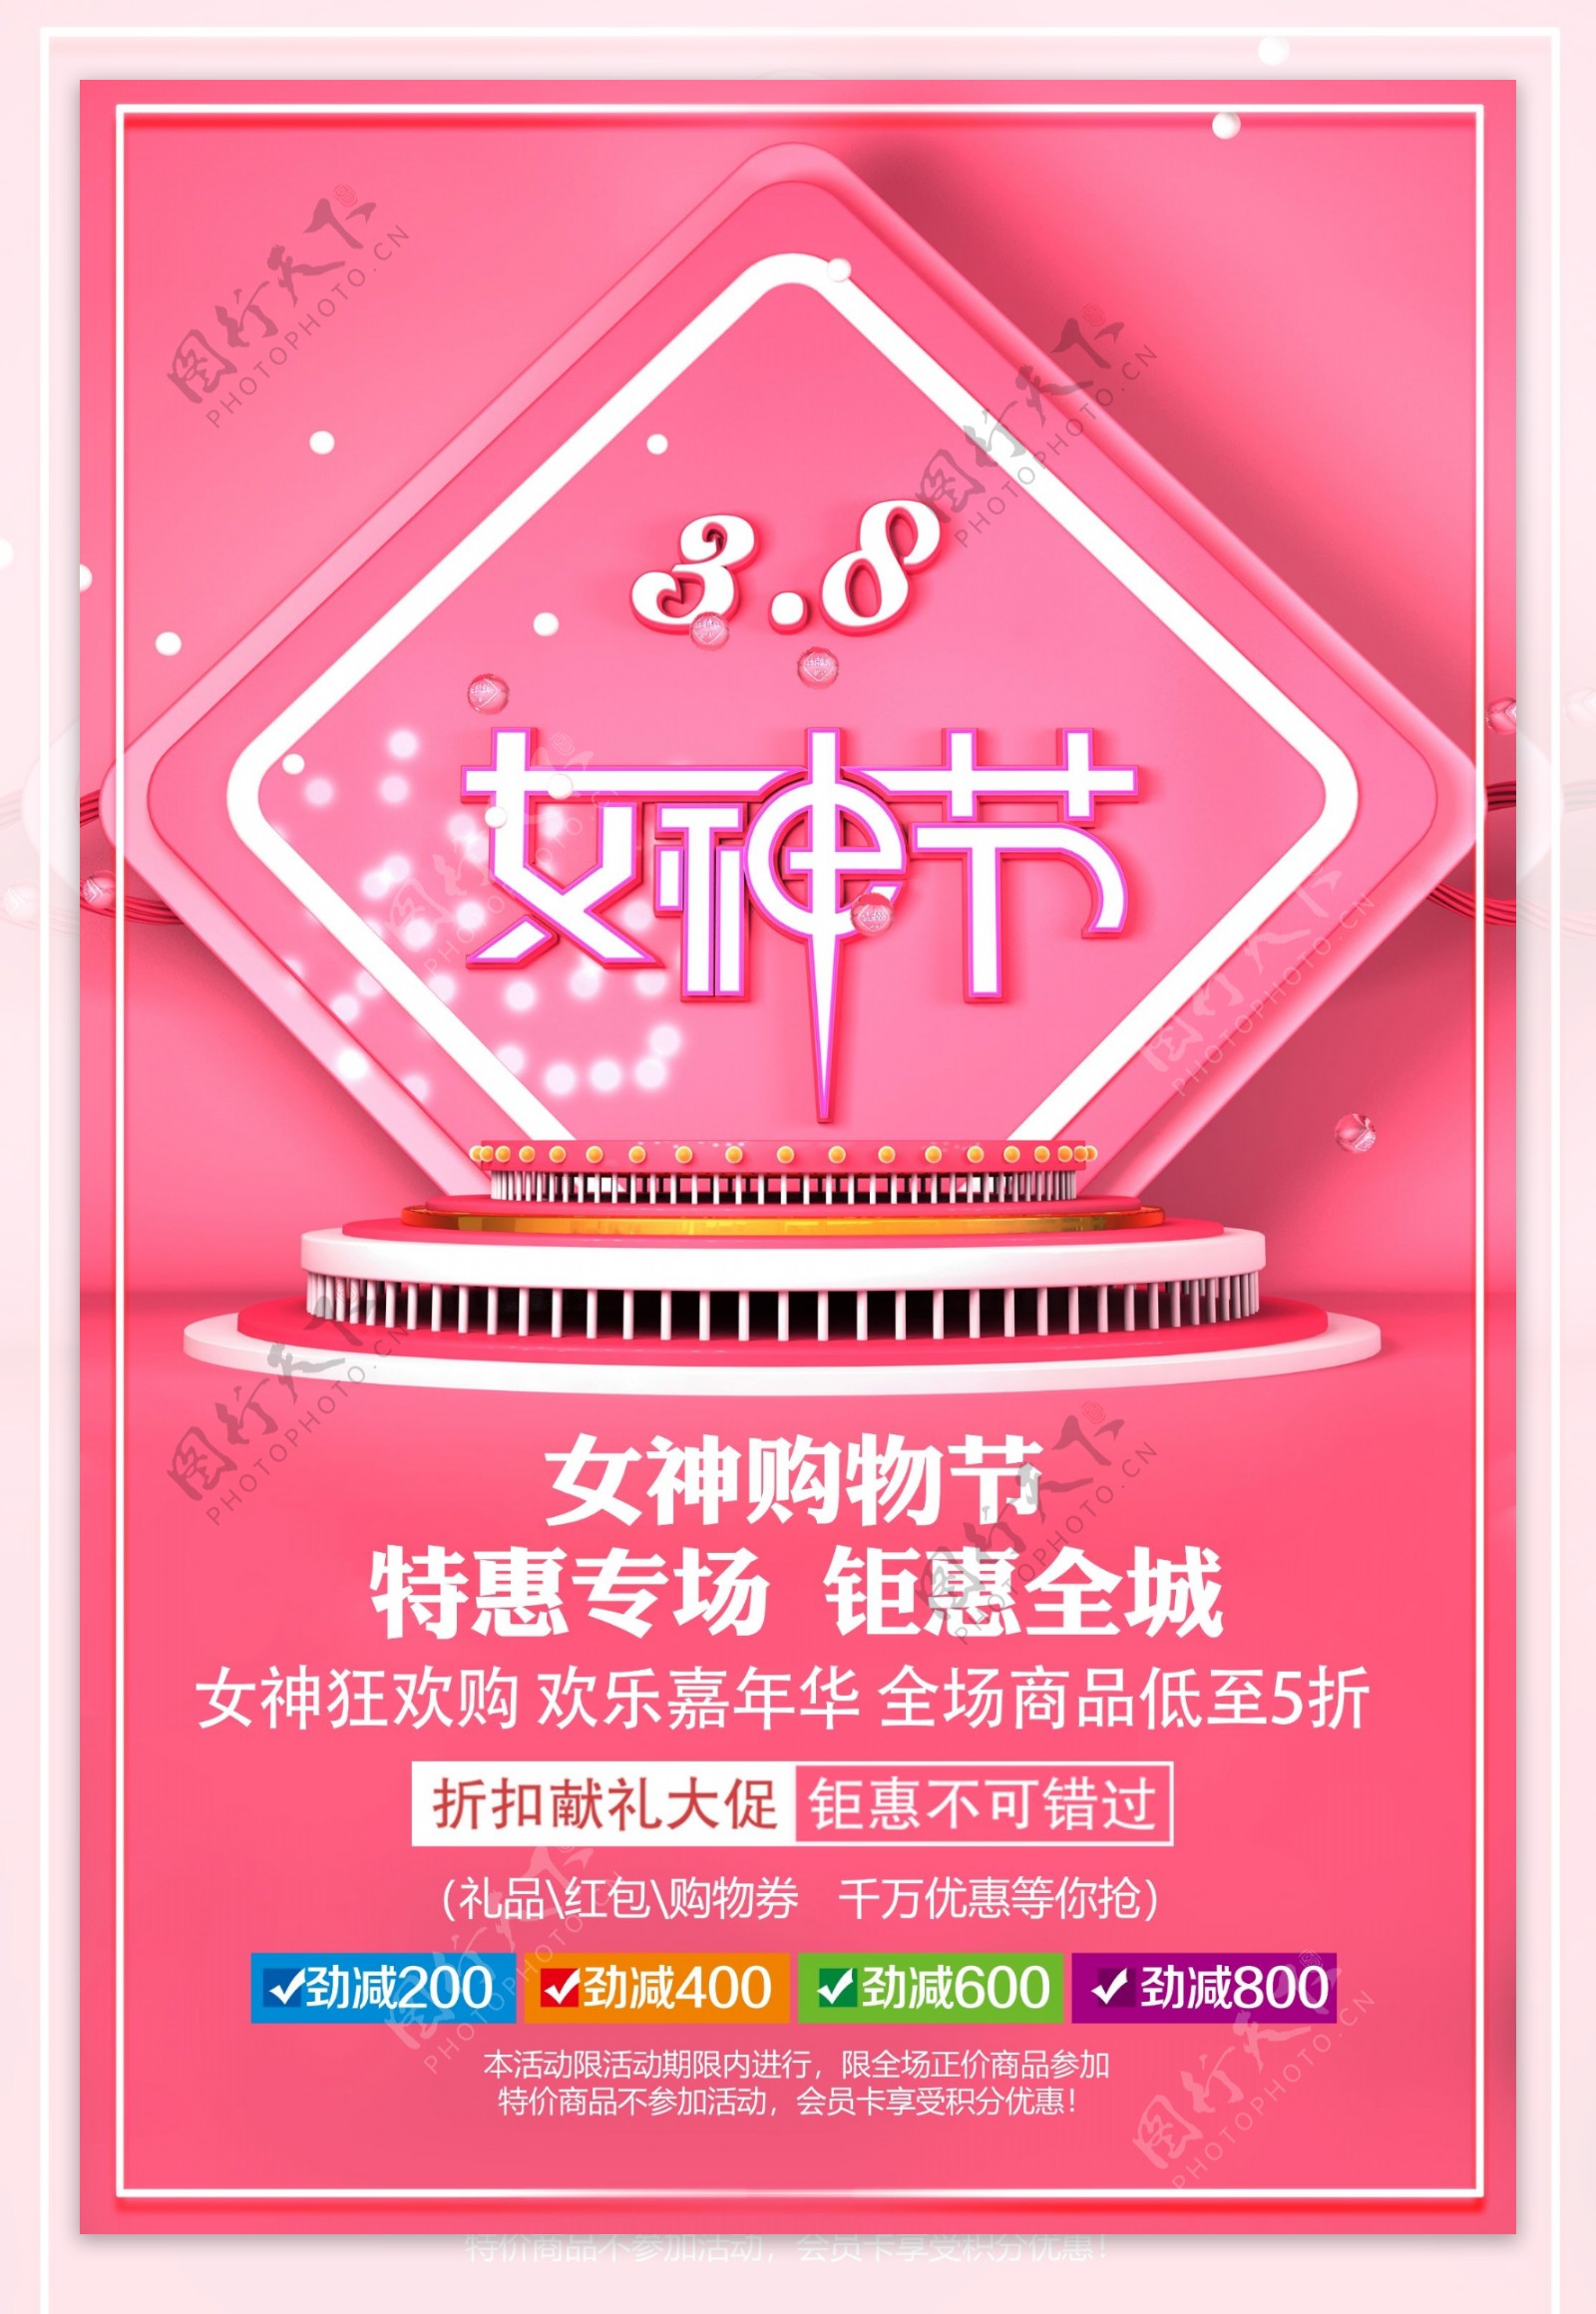 粉色3.8女神节促销活动海报